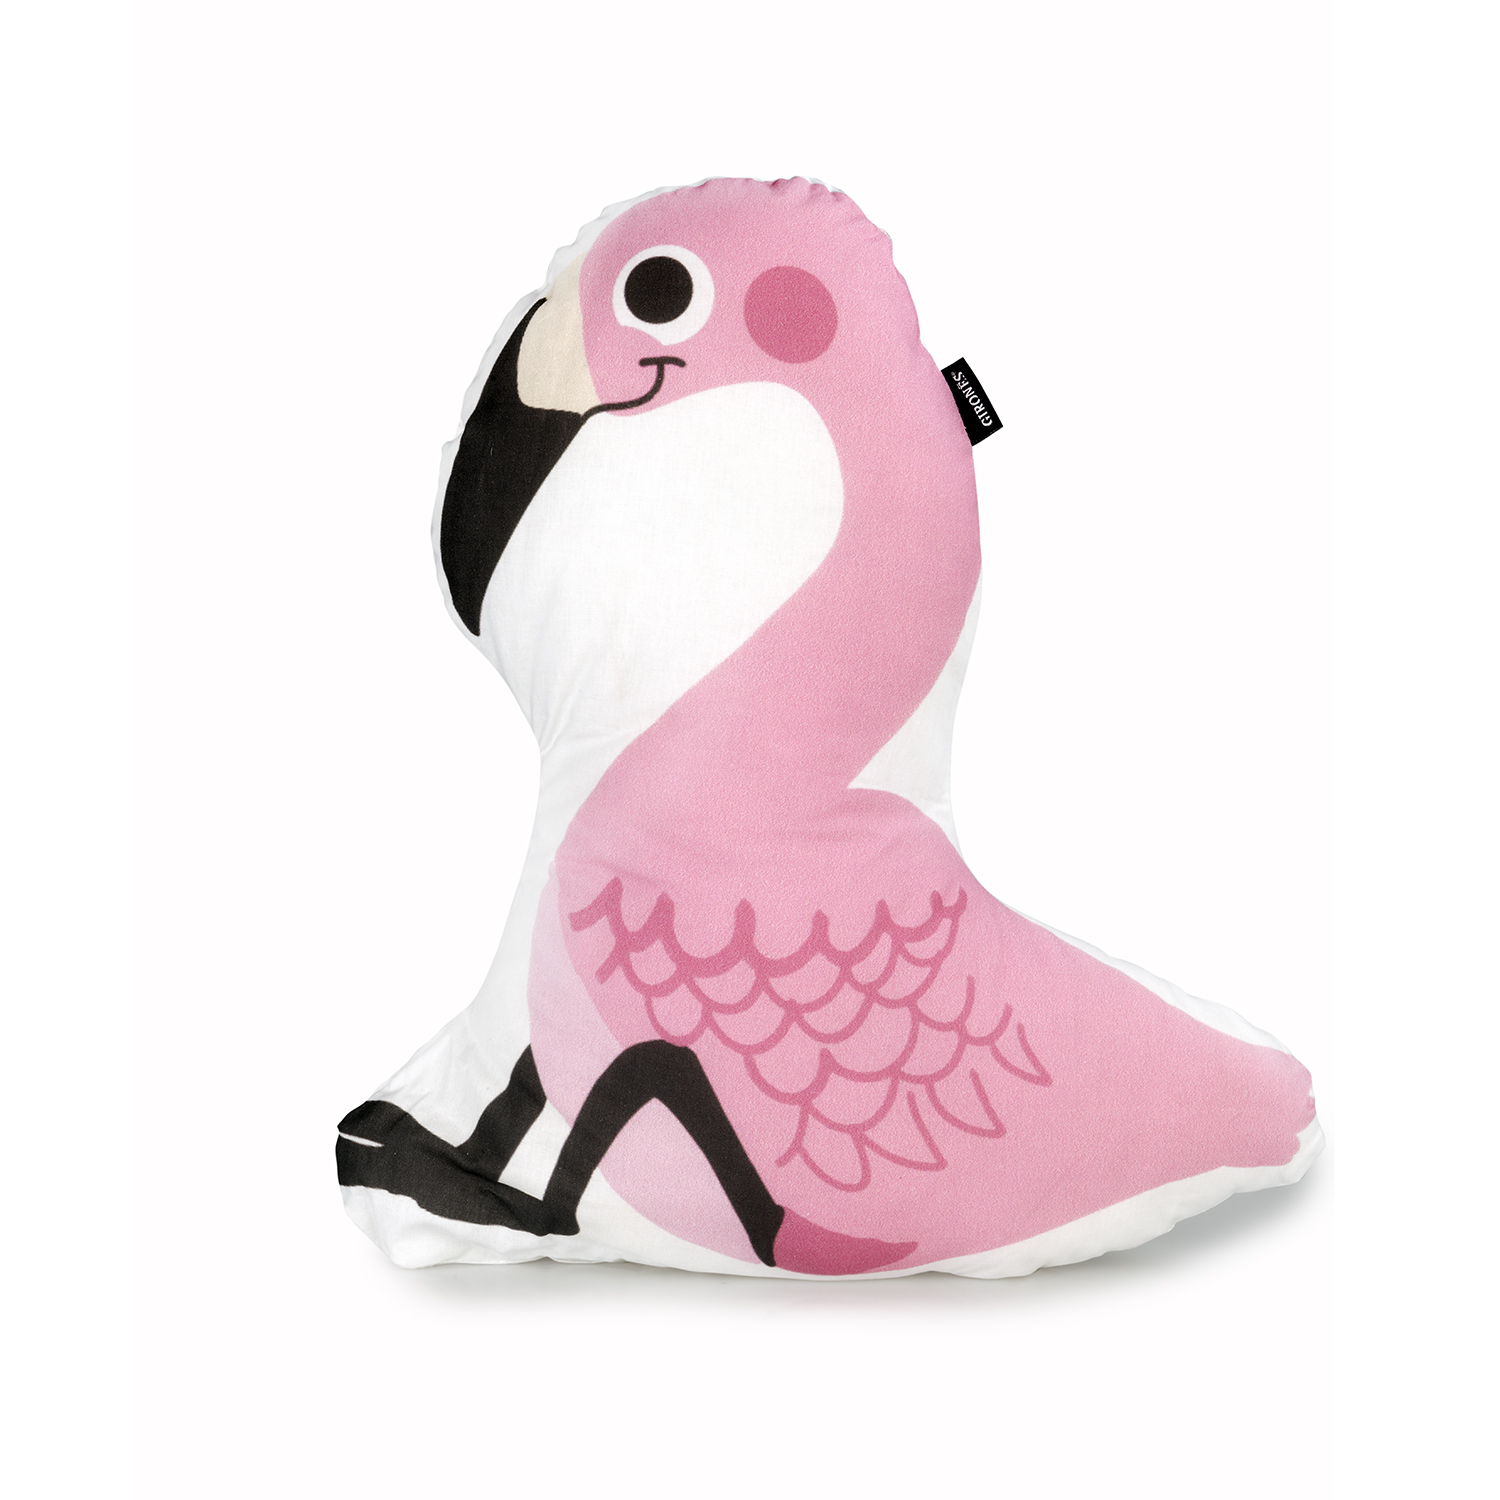 flamingo shaped cushion by GironesHome